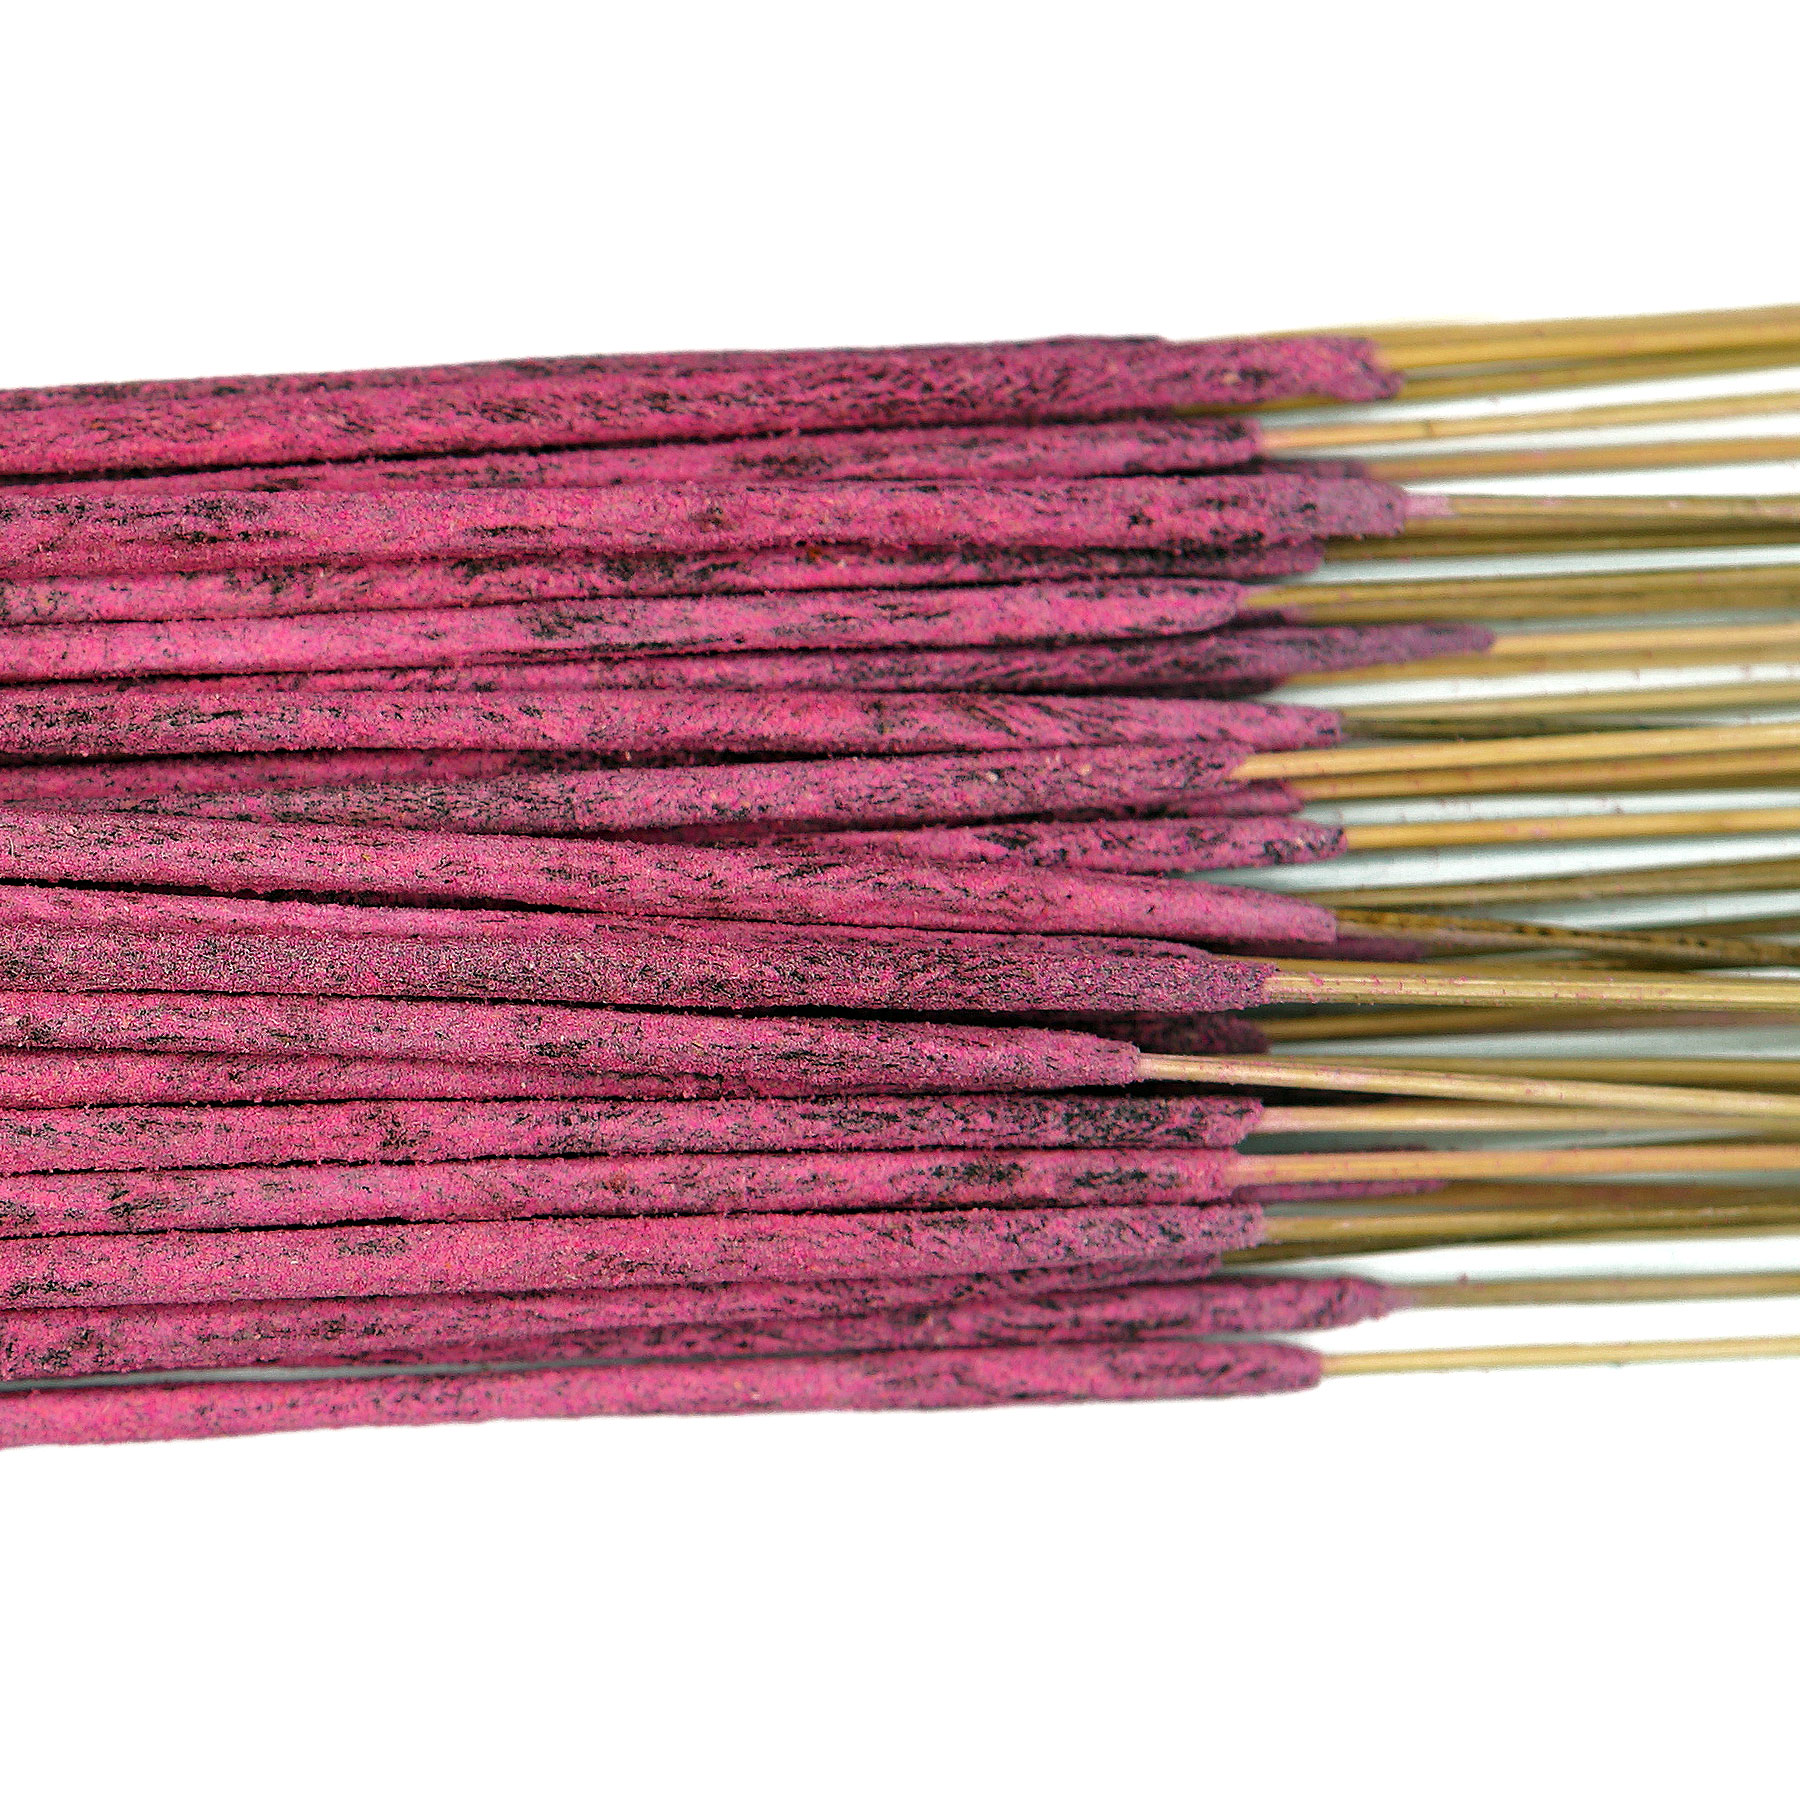 Pushkar rose - Incensi artigianali 15 stick